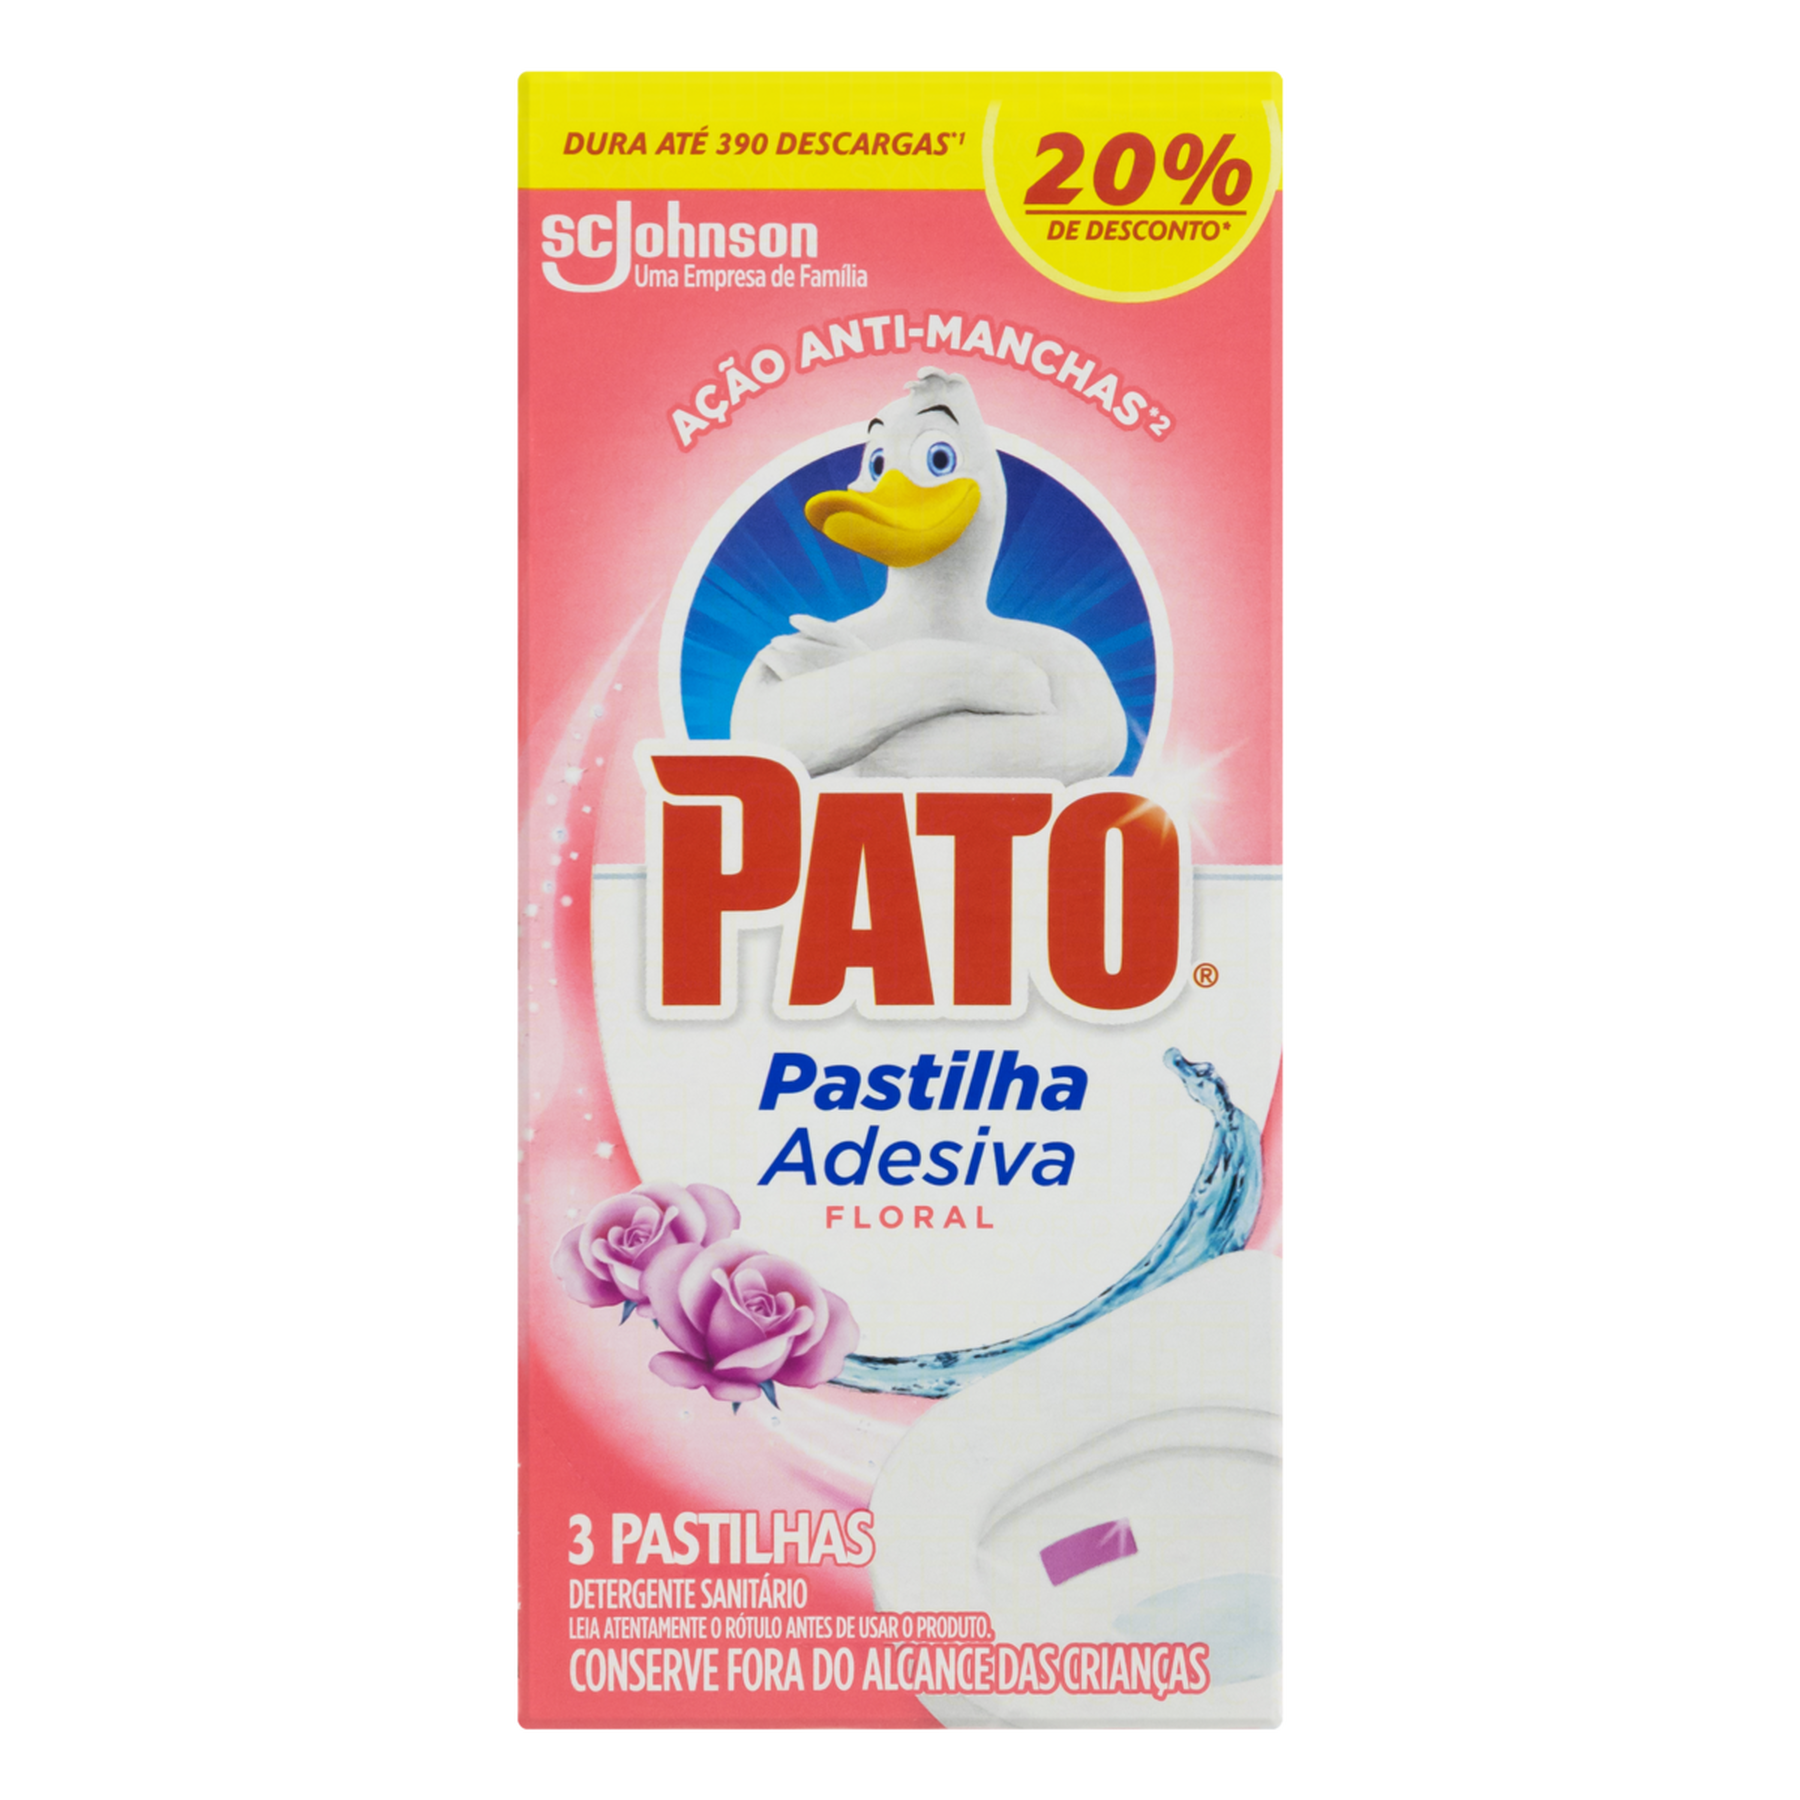 Detergente Sanitário Pastilha Adesiva Floral Pato C/3 Unidades